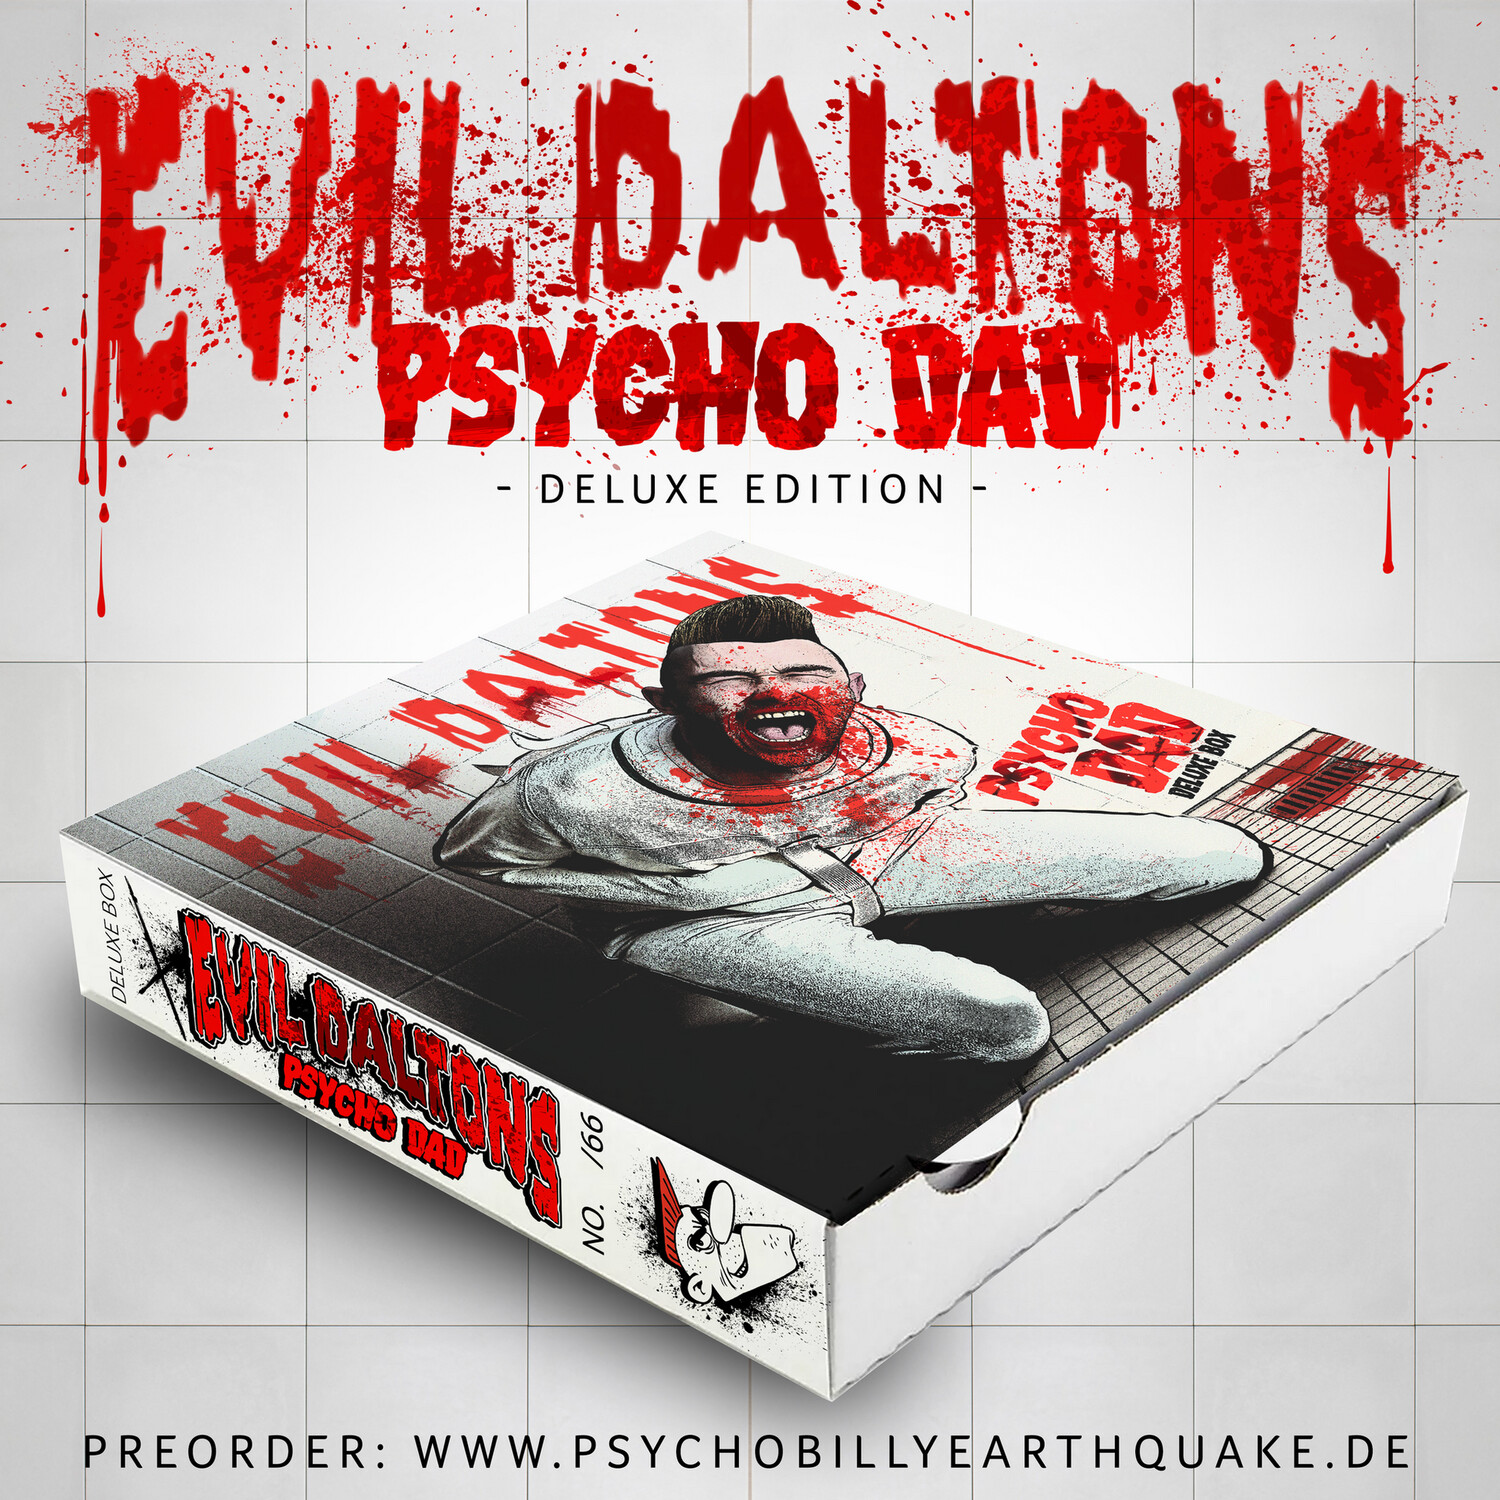 BOX - Evil Daltons - Psycho Dad / 12" Vinyl ALL COLORS + T-Shirt Size L / Limited Collectors Fan Edition Box / Release Date 30.06.2023